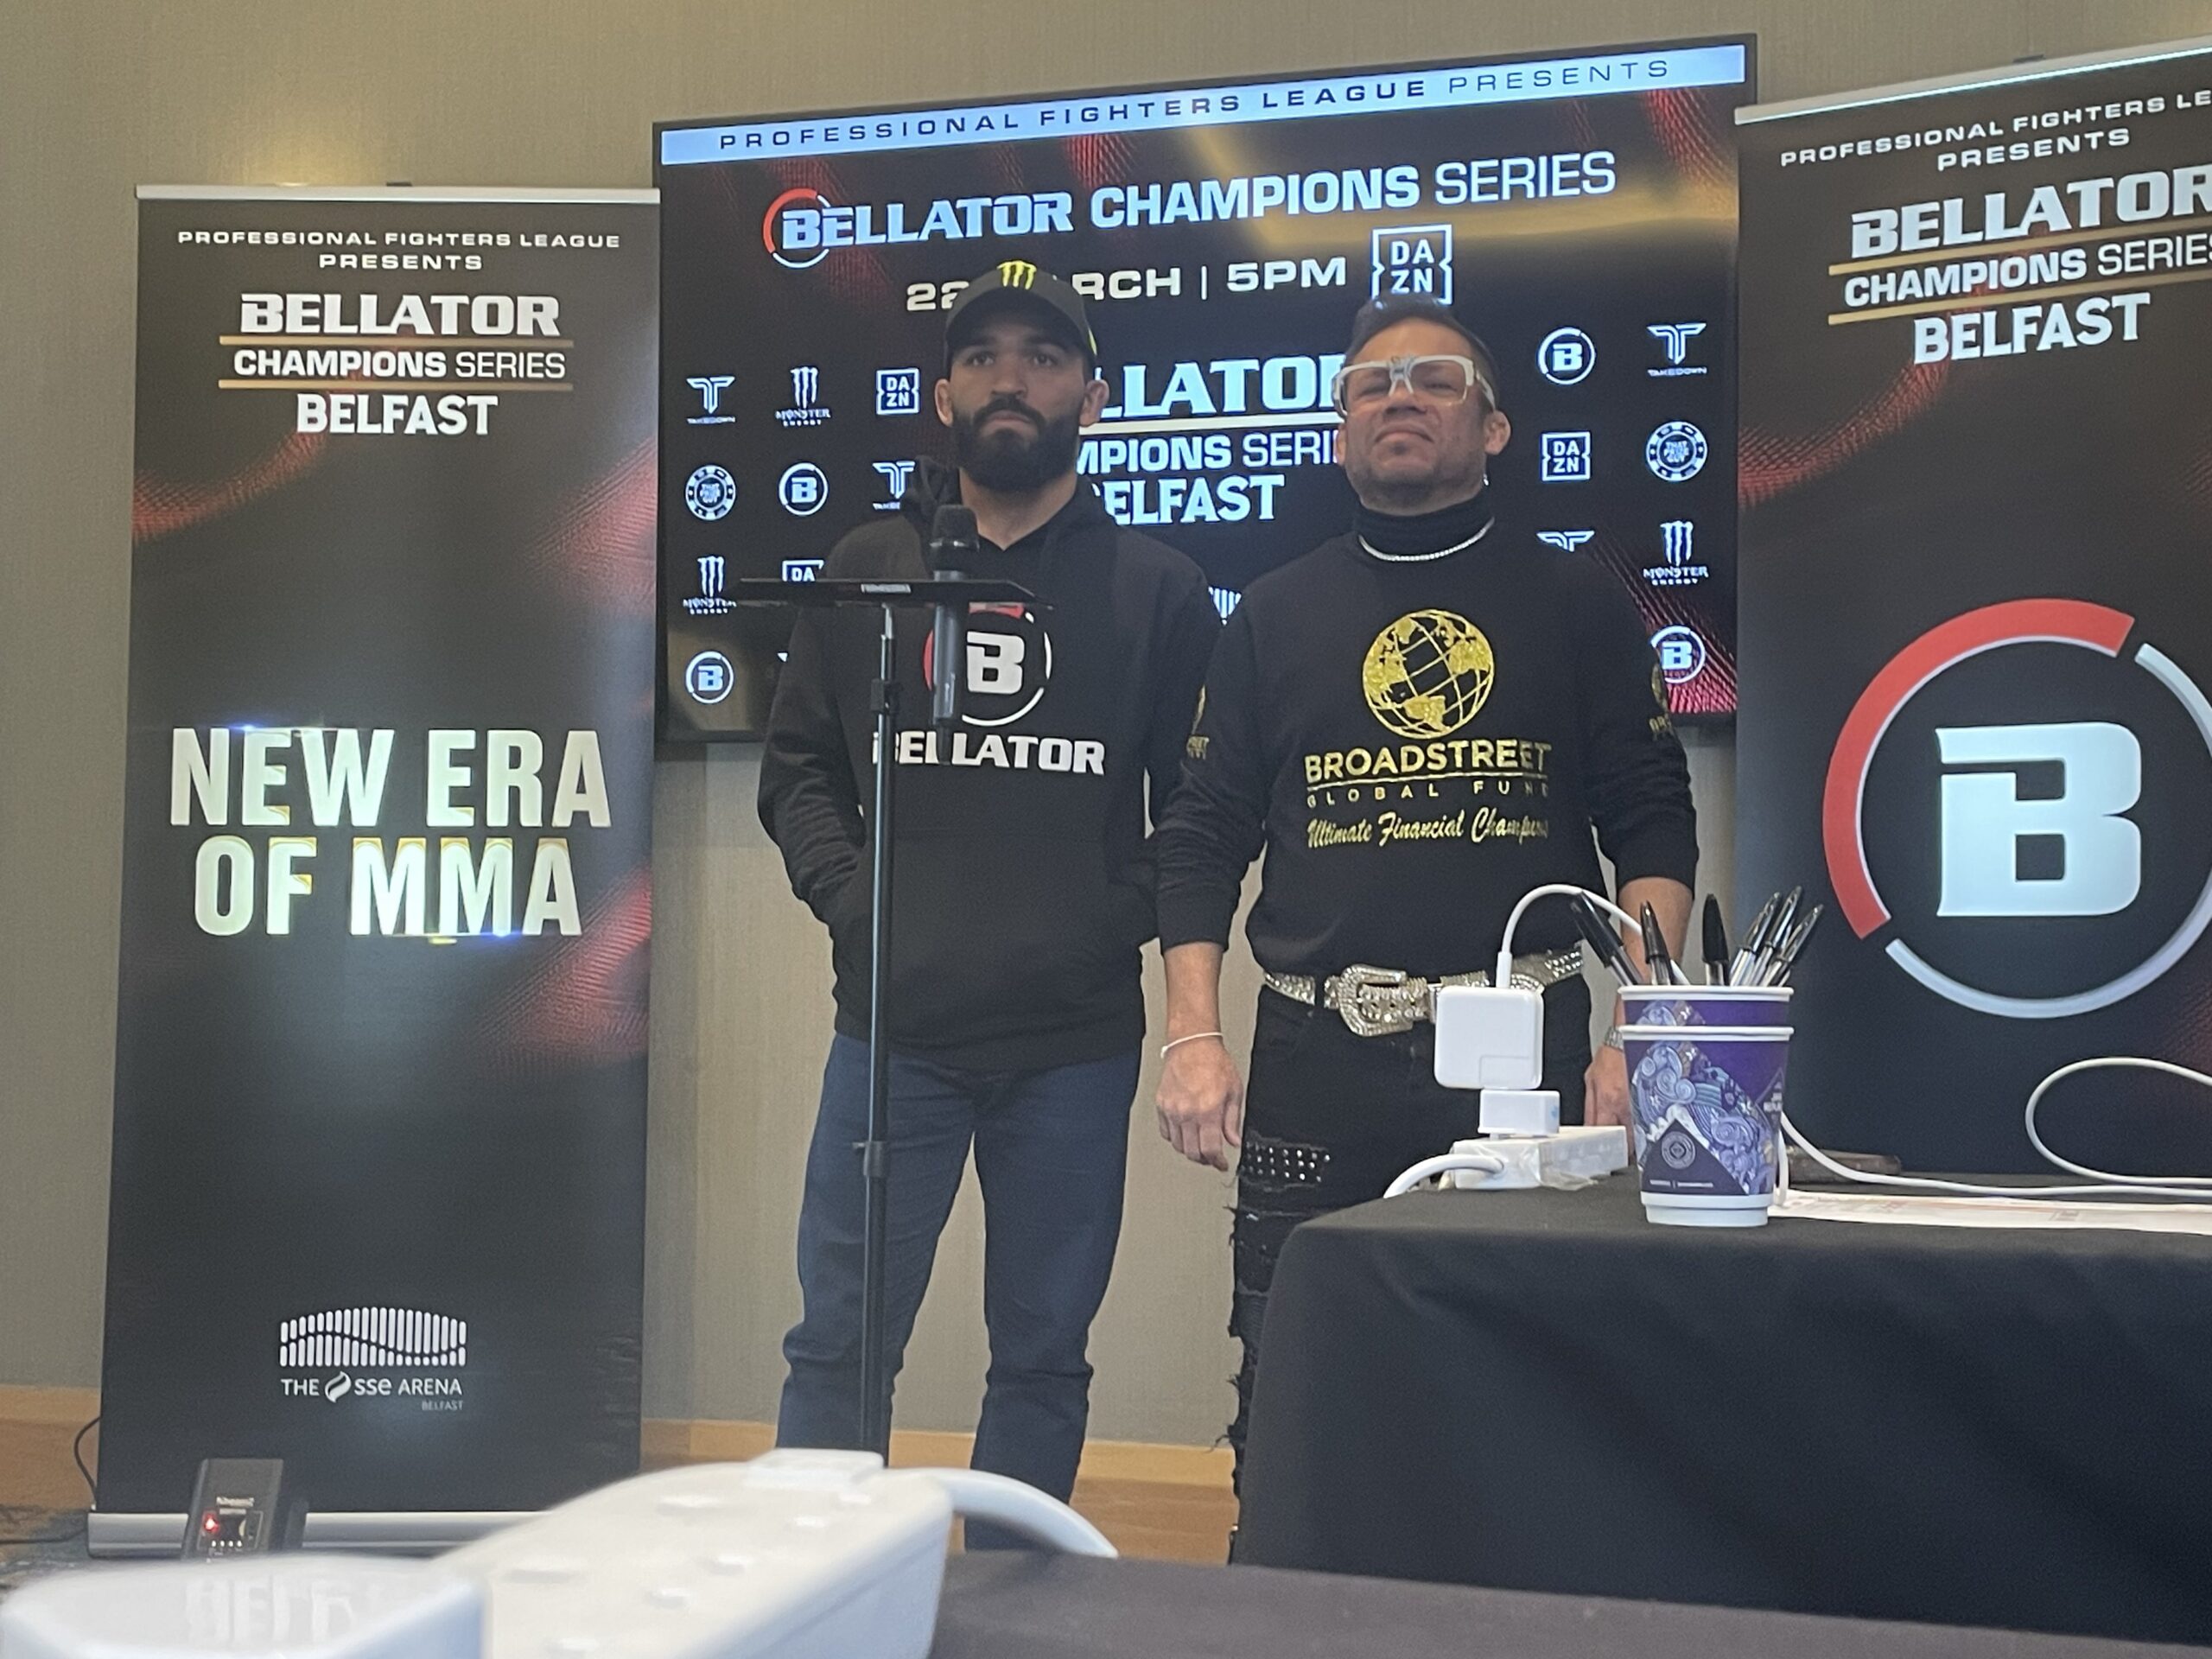 Bellator Champions Series: Belfast – Media Day